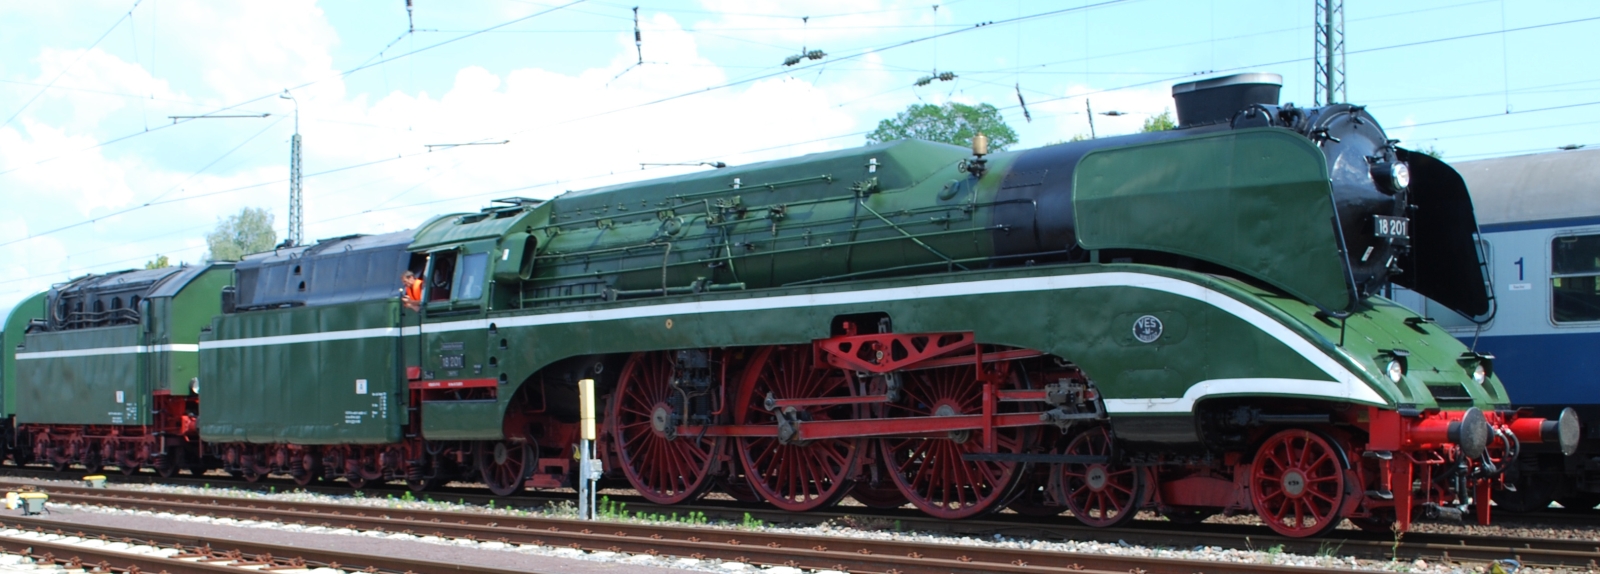 18 201 with both tenders in June 2010 in Darmstadt-Kranichstein